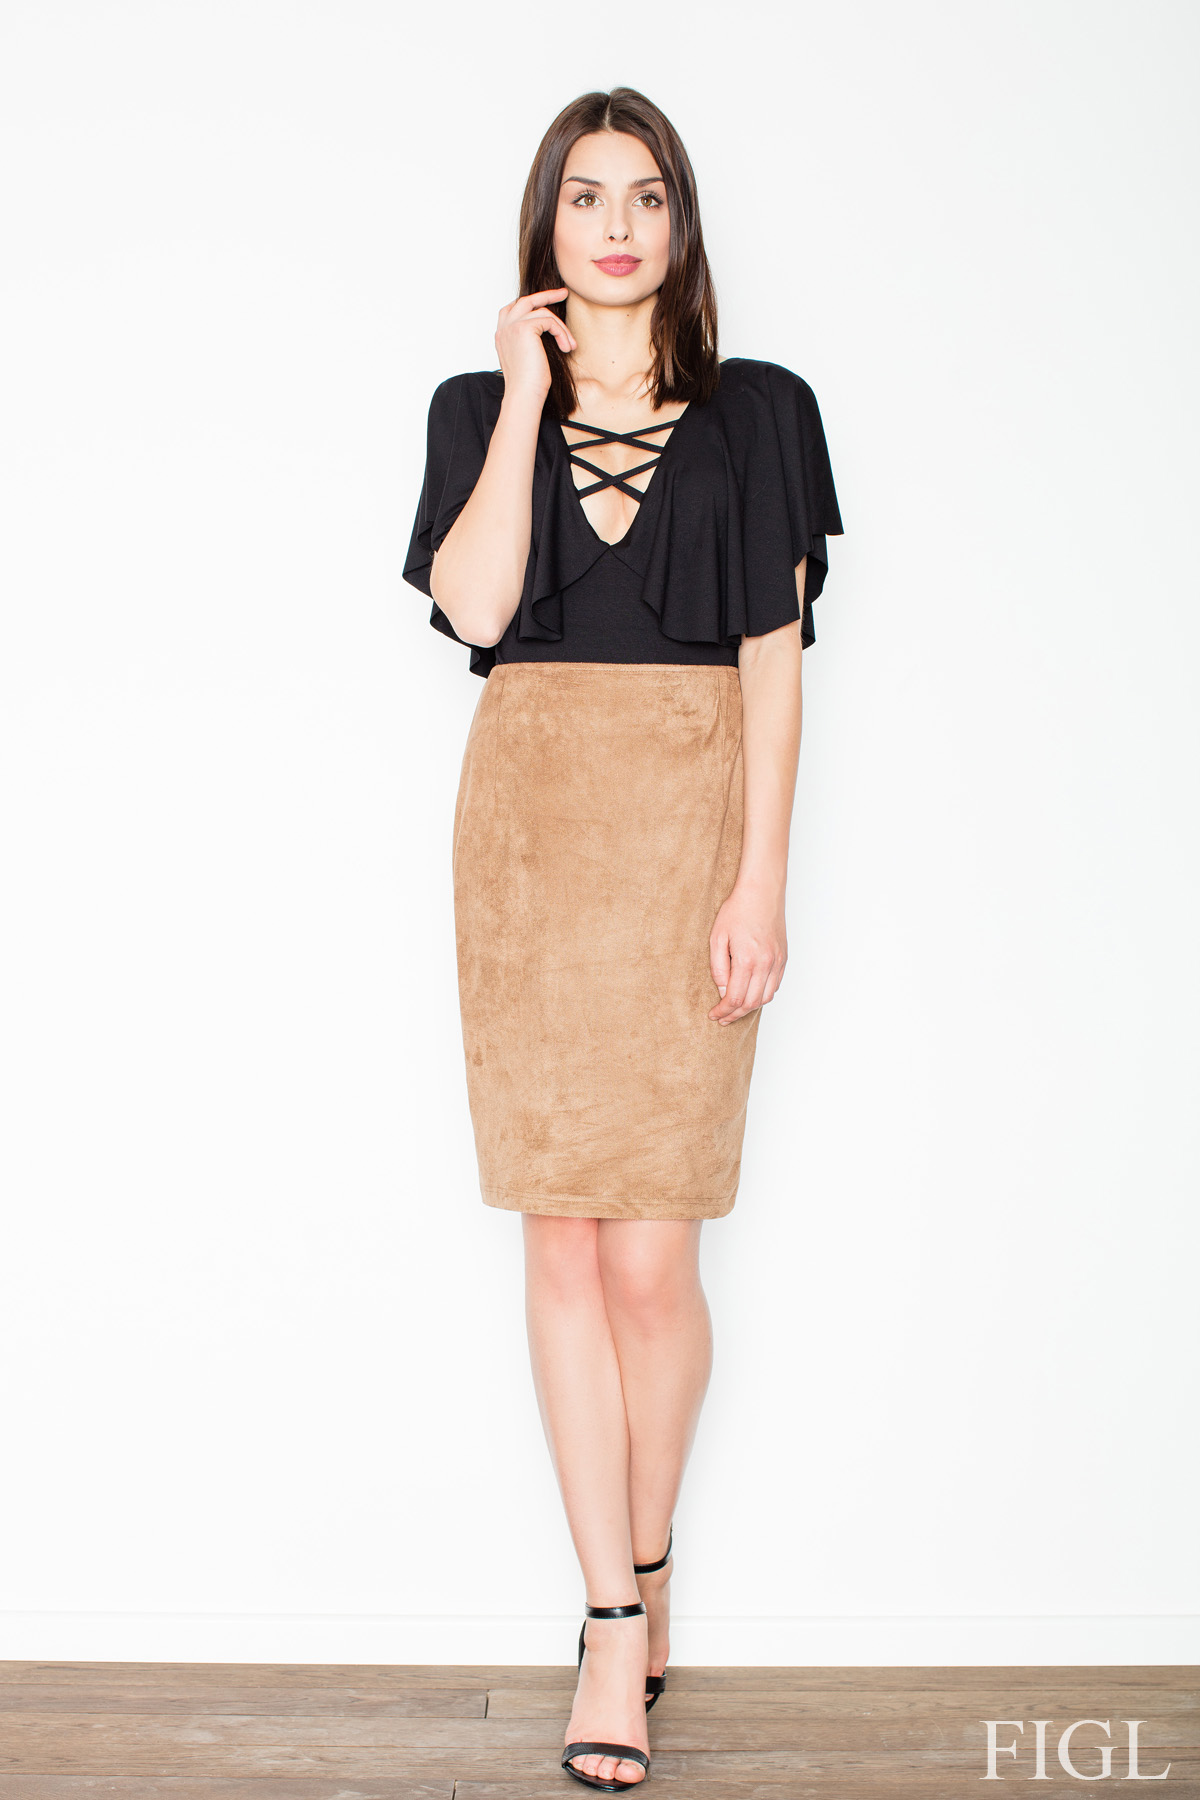  Skirt model 52571 Figl  brown